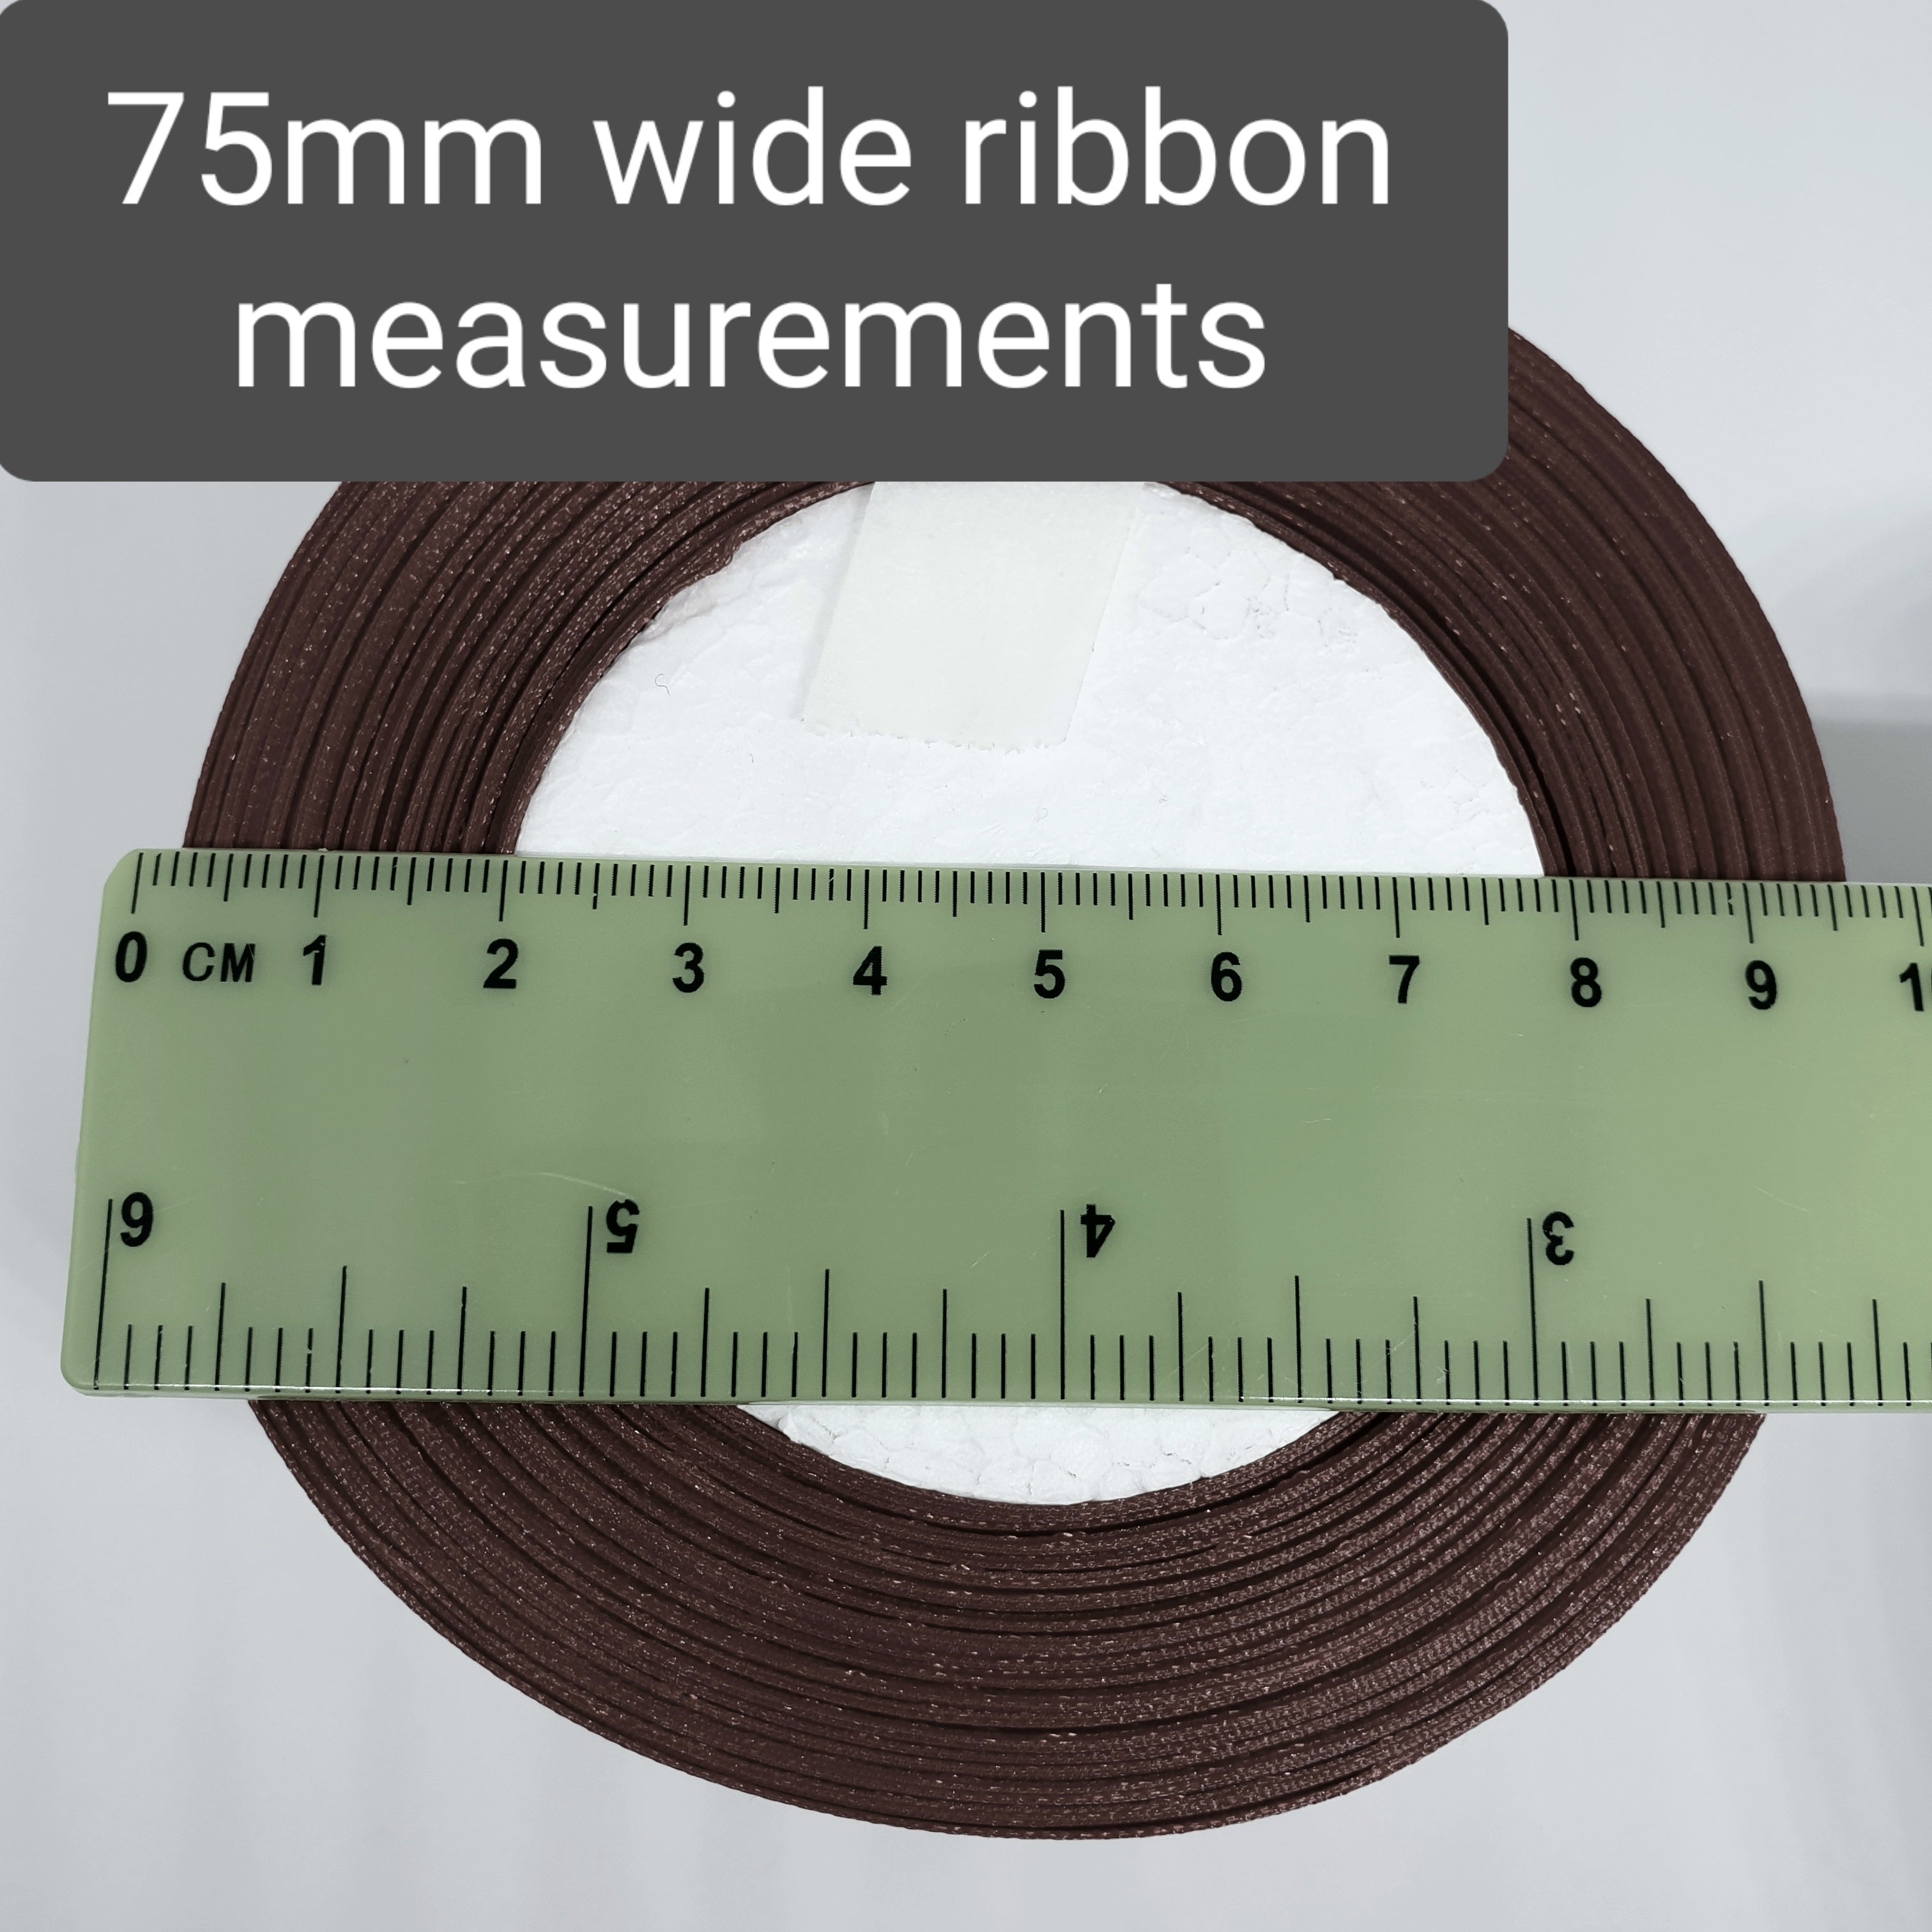 MajorCrafts 75mm wide Dark Grey Single Sided Satin Fabric Ribbon Roll R03